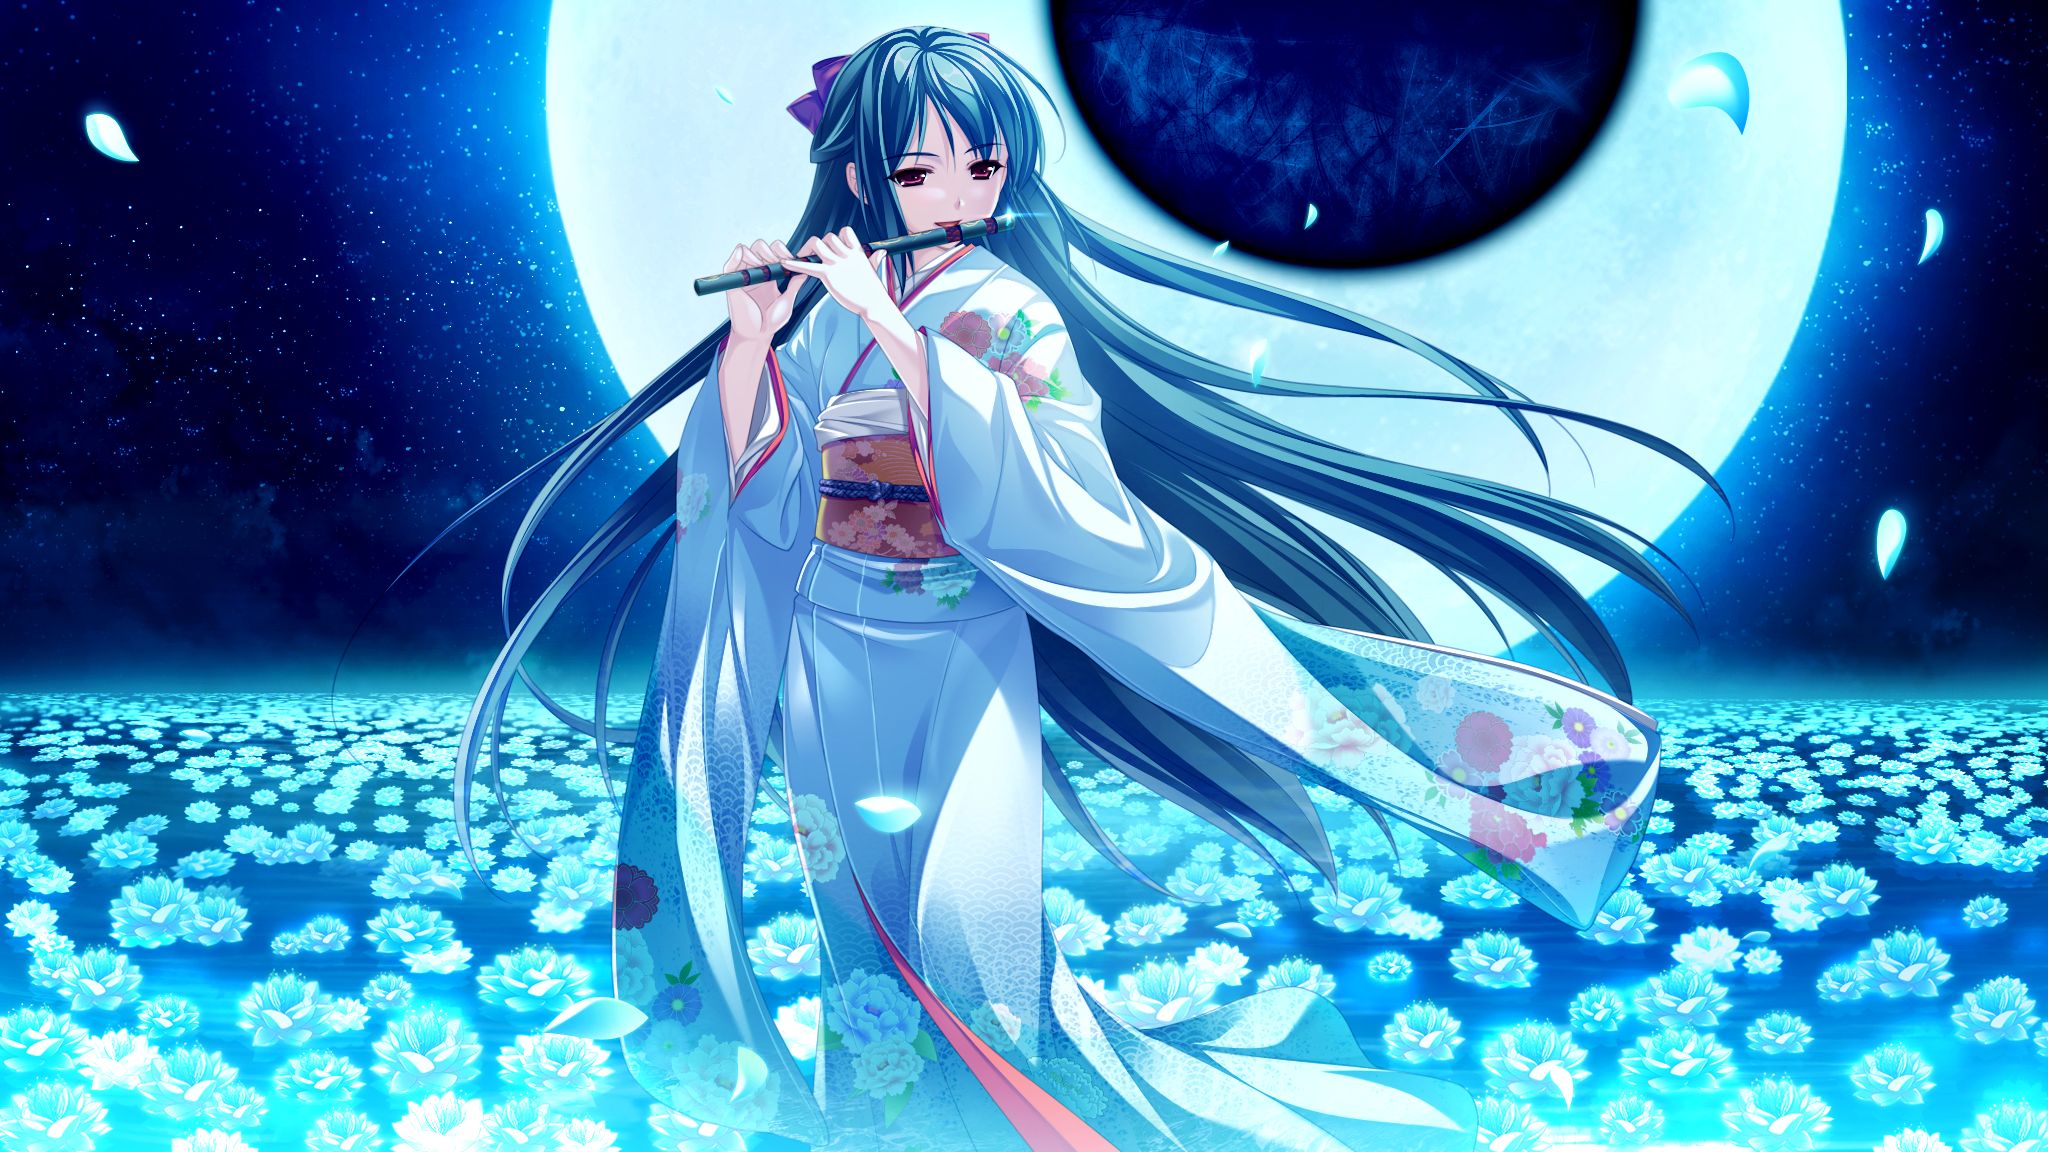 684497 descargar imagen animado, tsukumo no kanade, pelo azul, flor, flauta, ropa japonesa, kimono, pelo largo, luna, noche, disfraz tradicional: fondos de pantalla y protectores de pantalla gratis